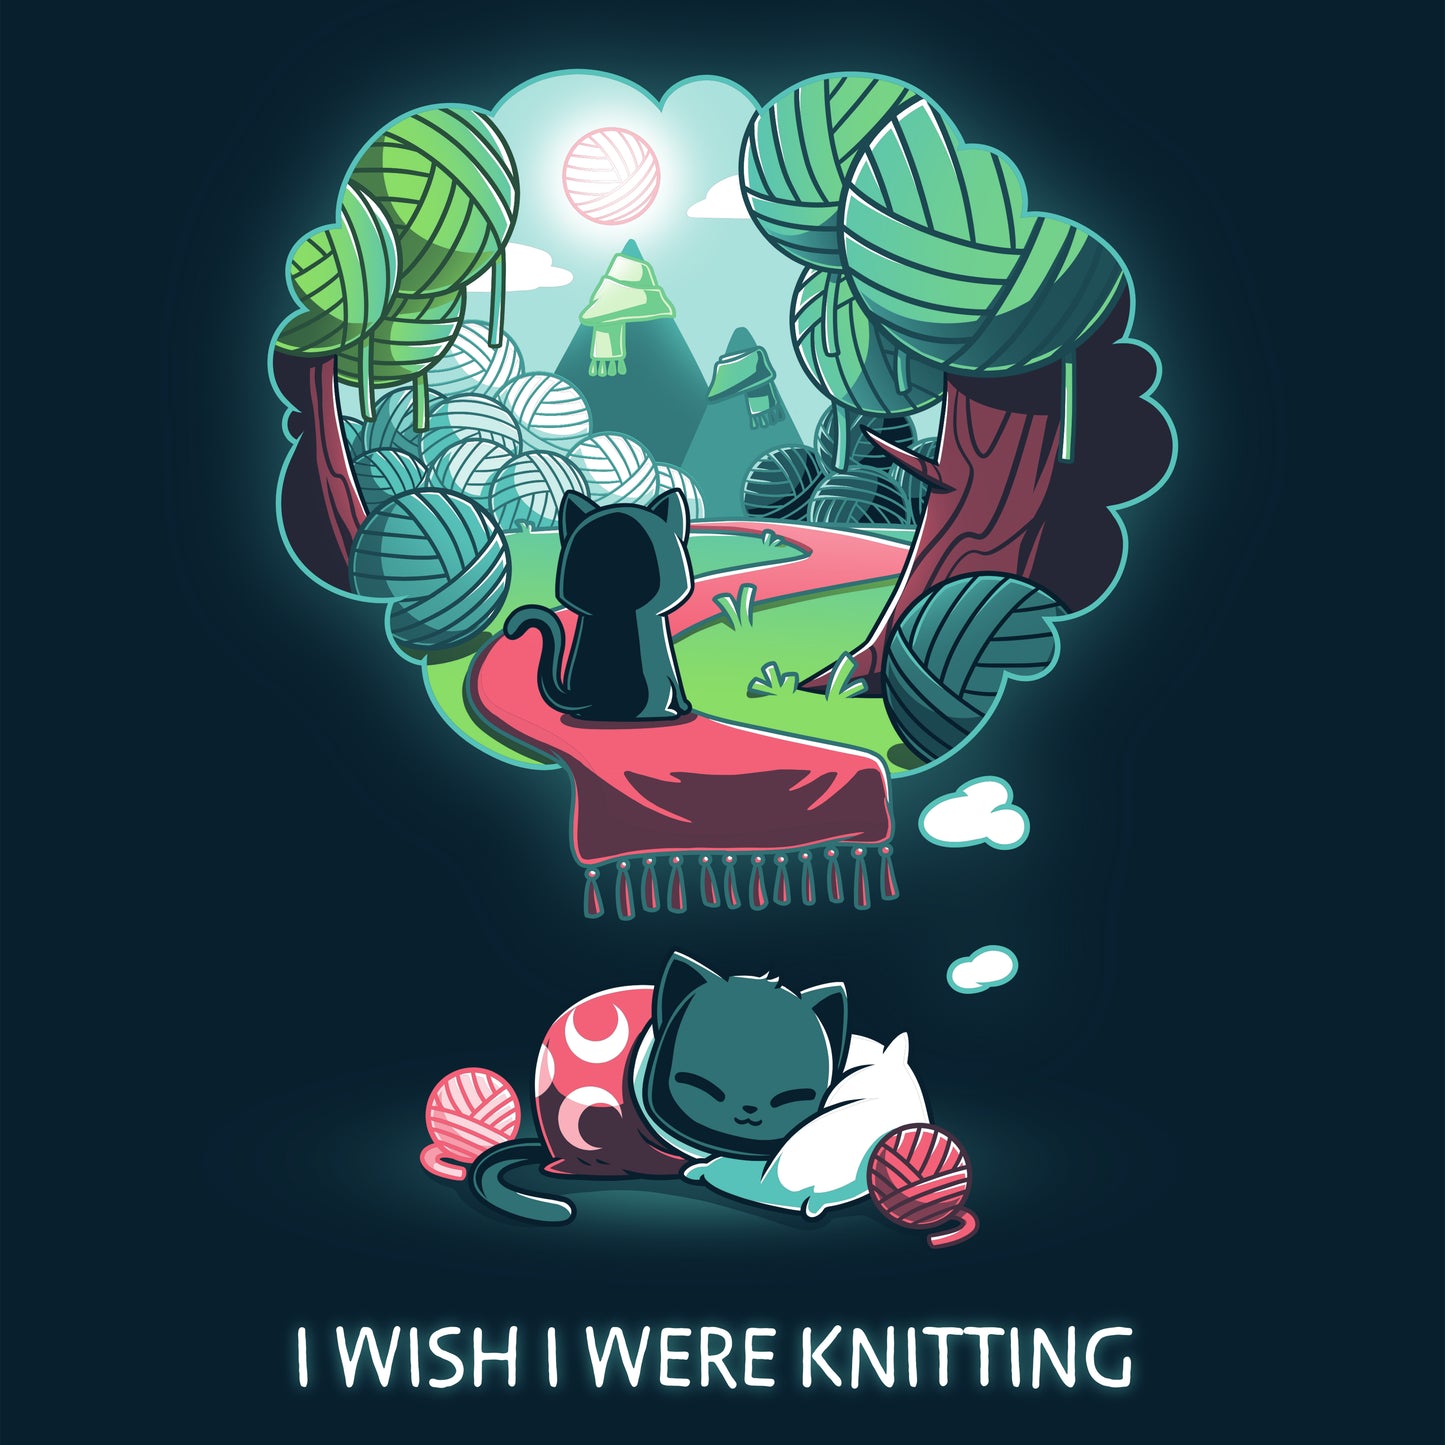 I wish were knitting TeeTurtle t - shirt.